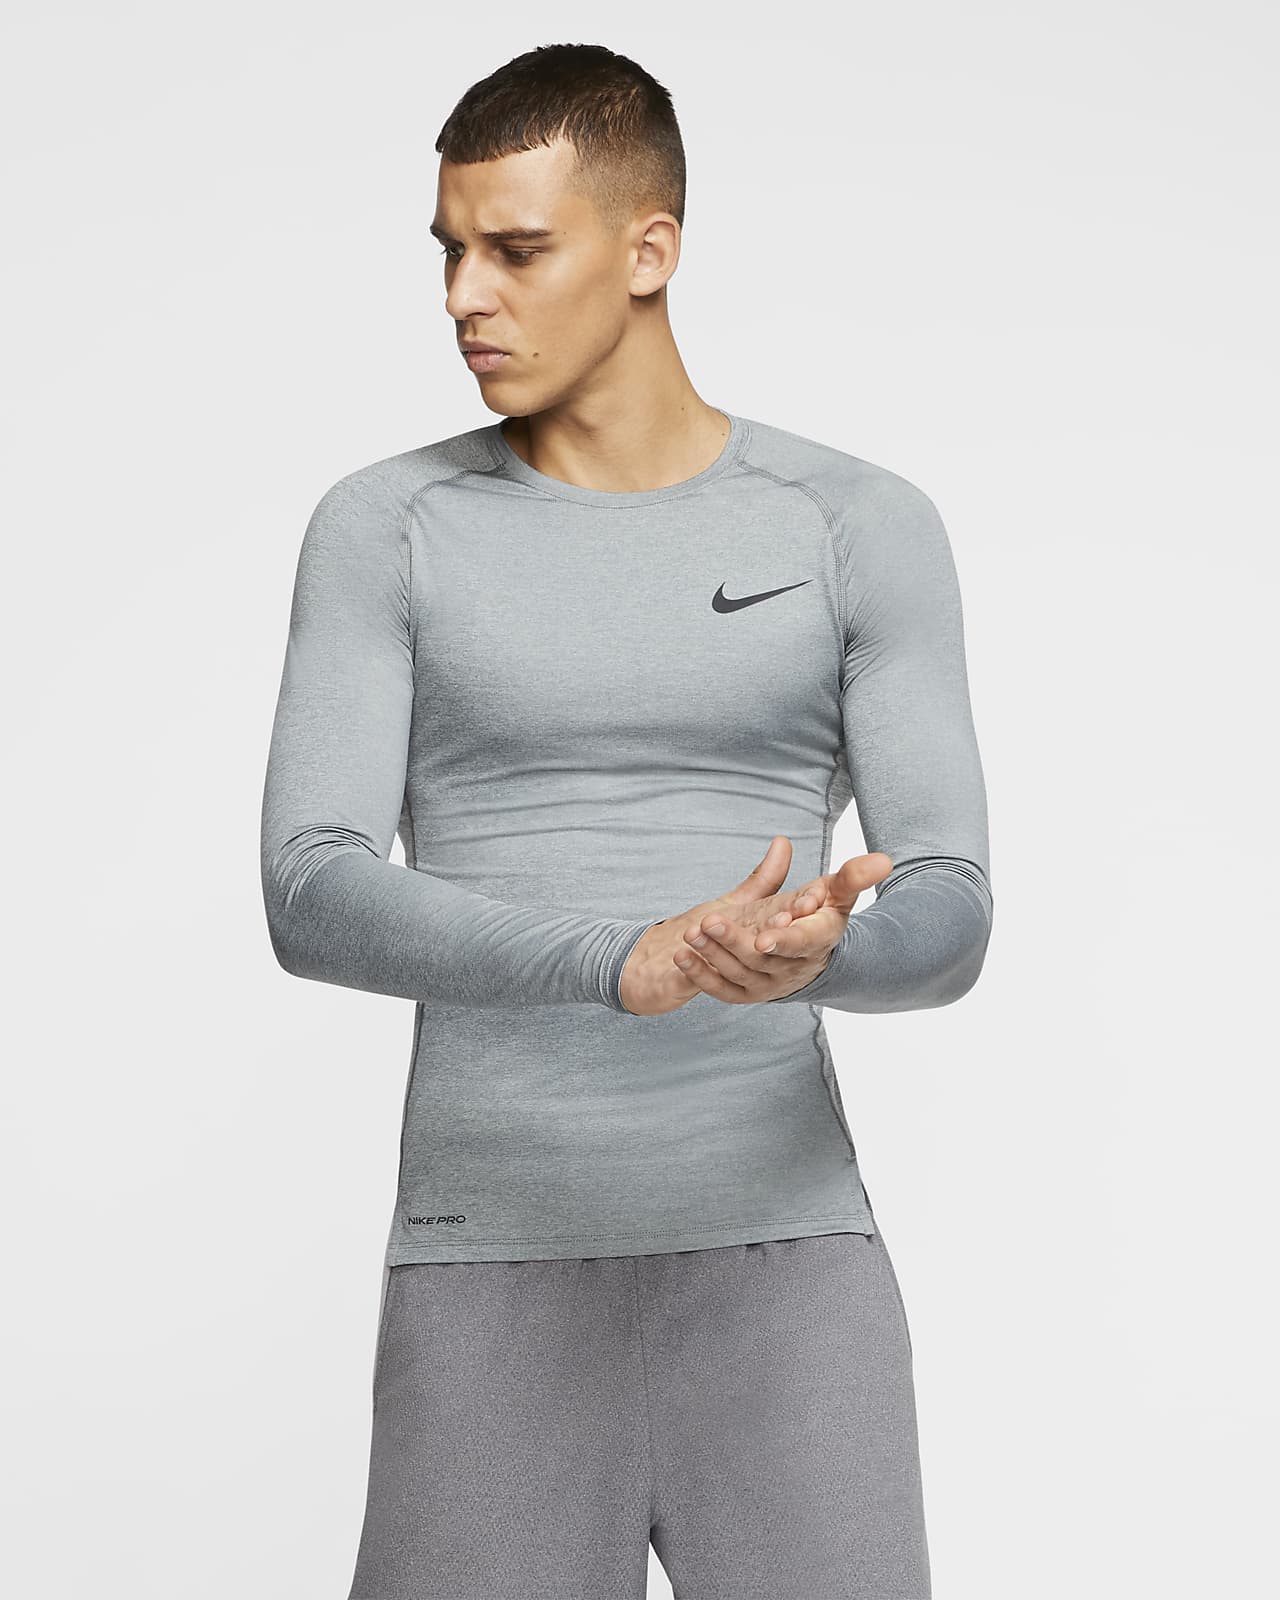 Tight-Fit Long-Sleeve Top. Nike LU